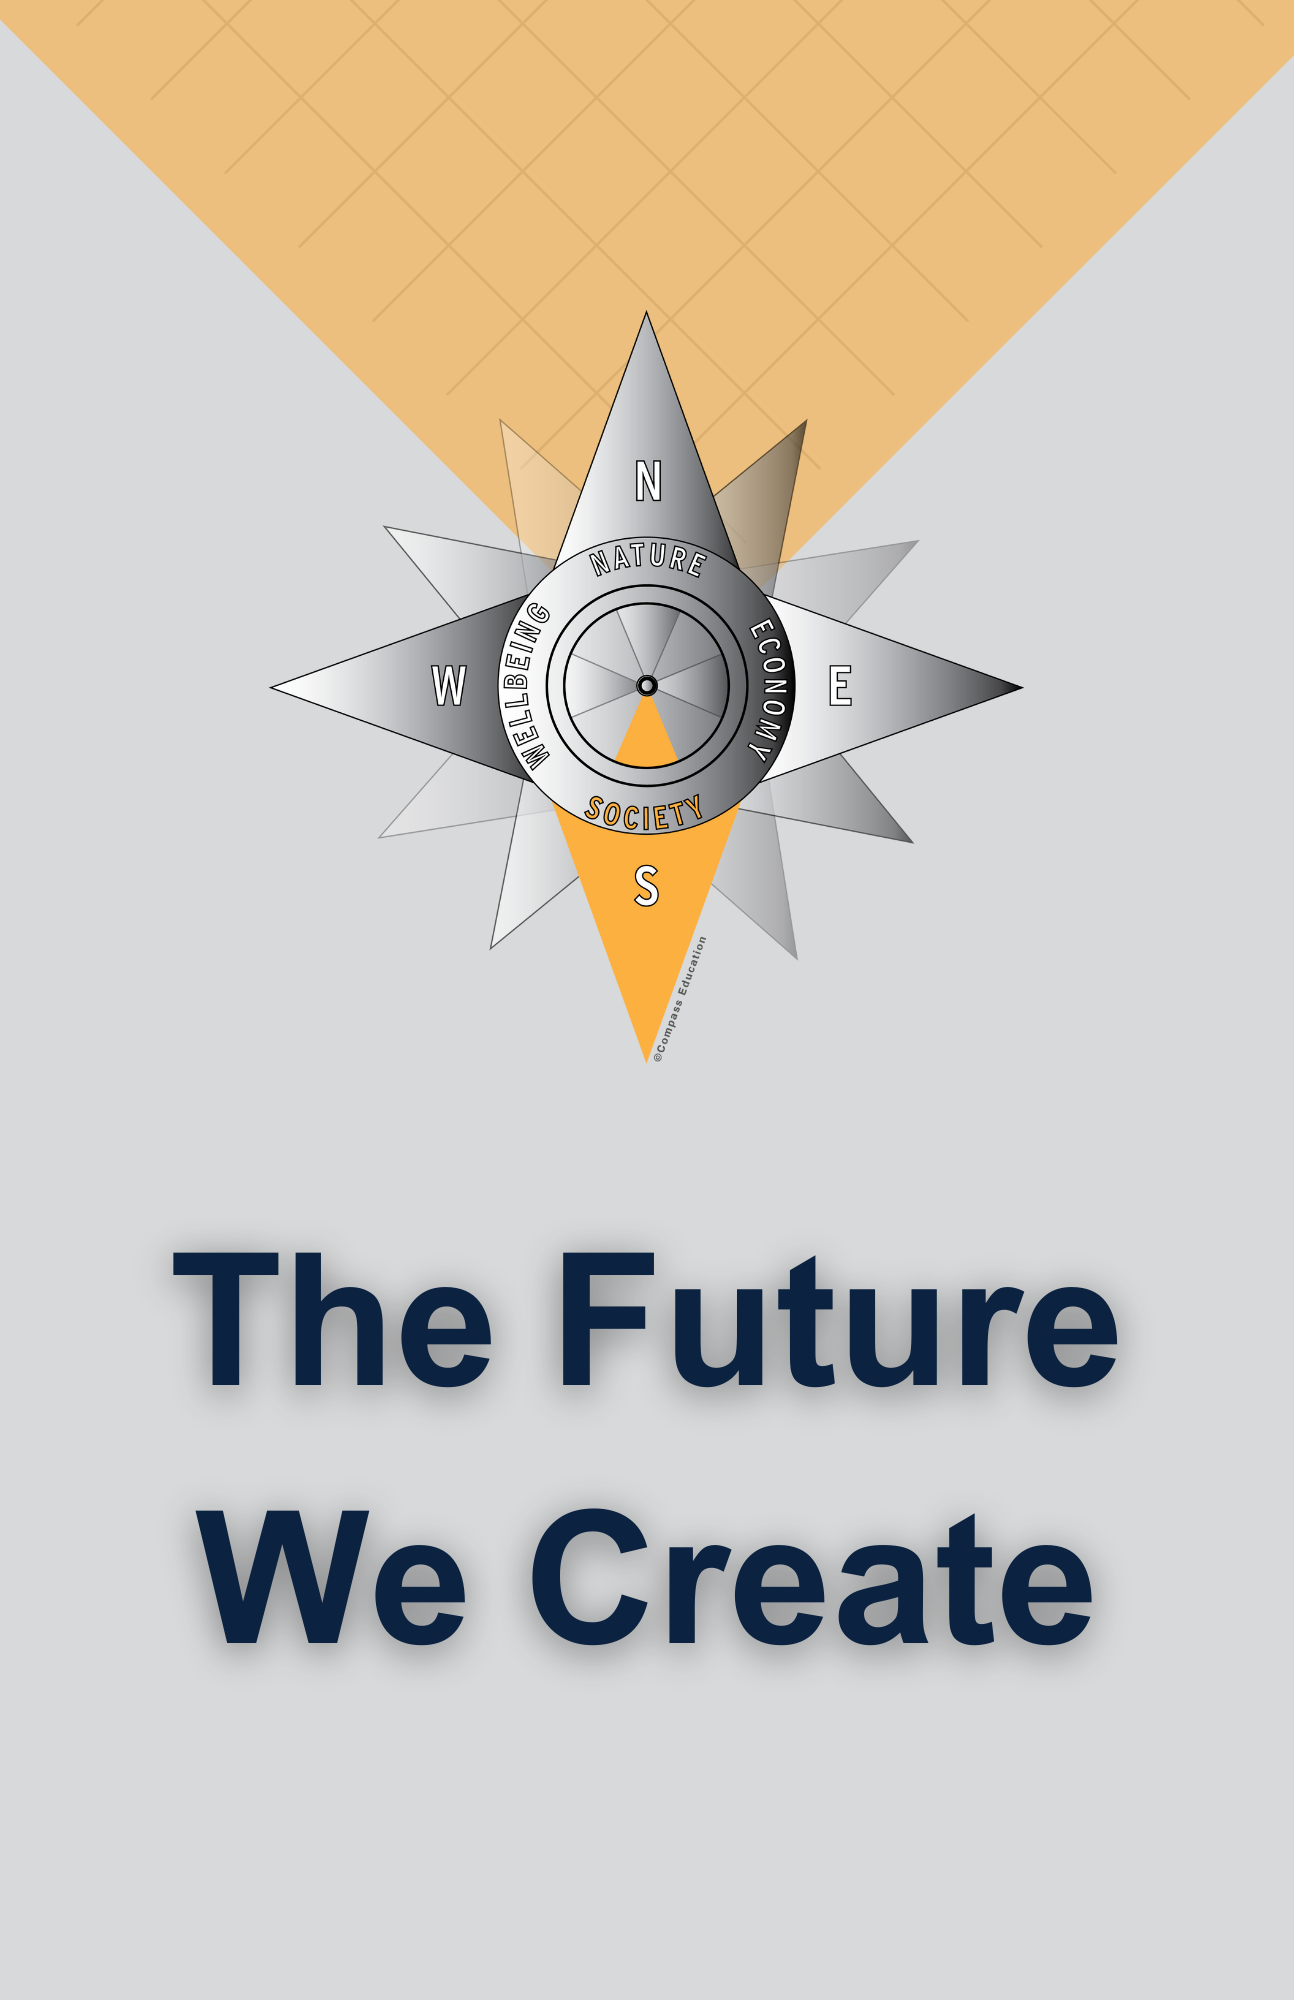 The Future We Create